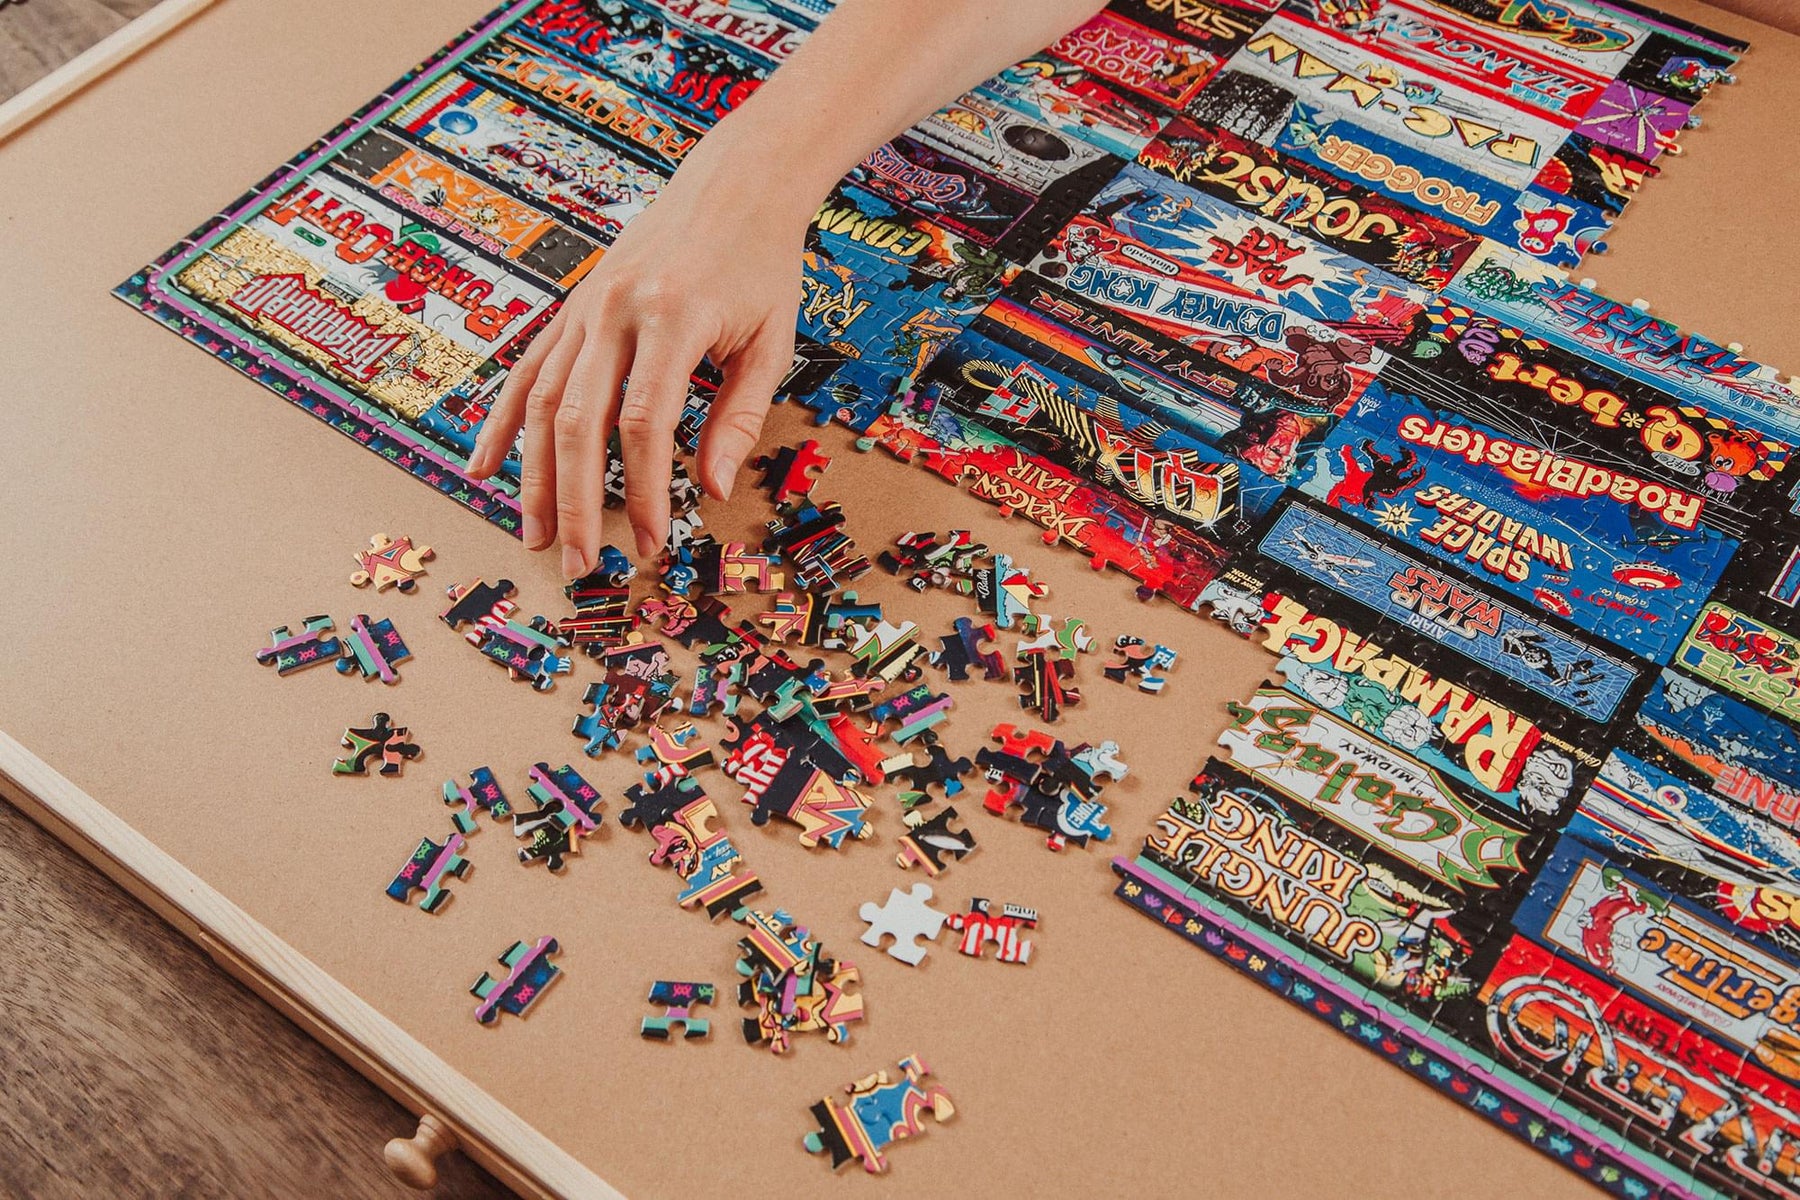 Arcadeageddon! Retro Arcade Game Collage 1000-Piece Jigsaw Puzzle